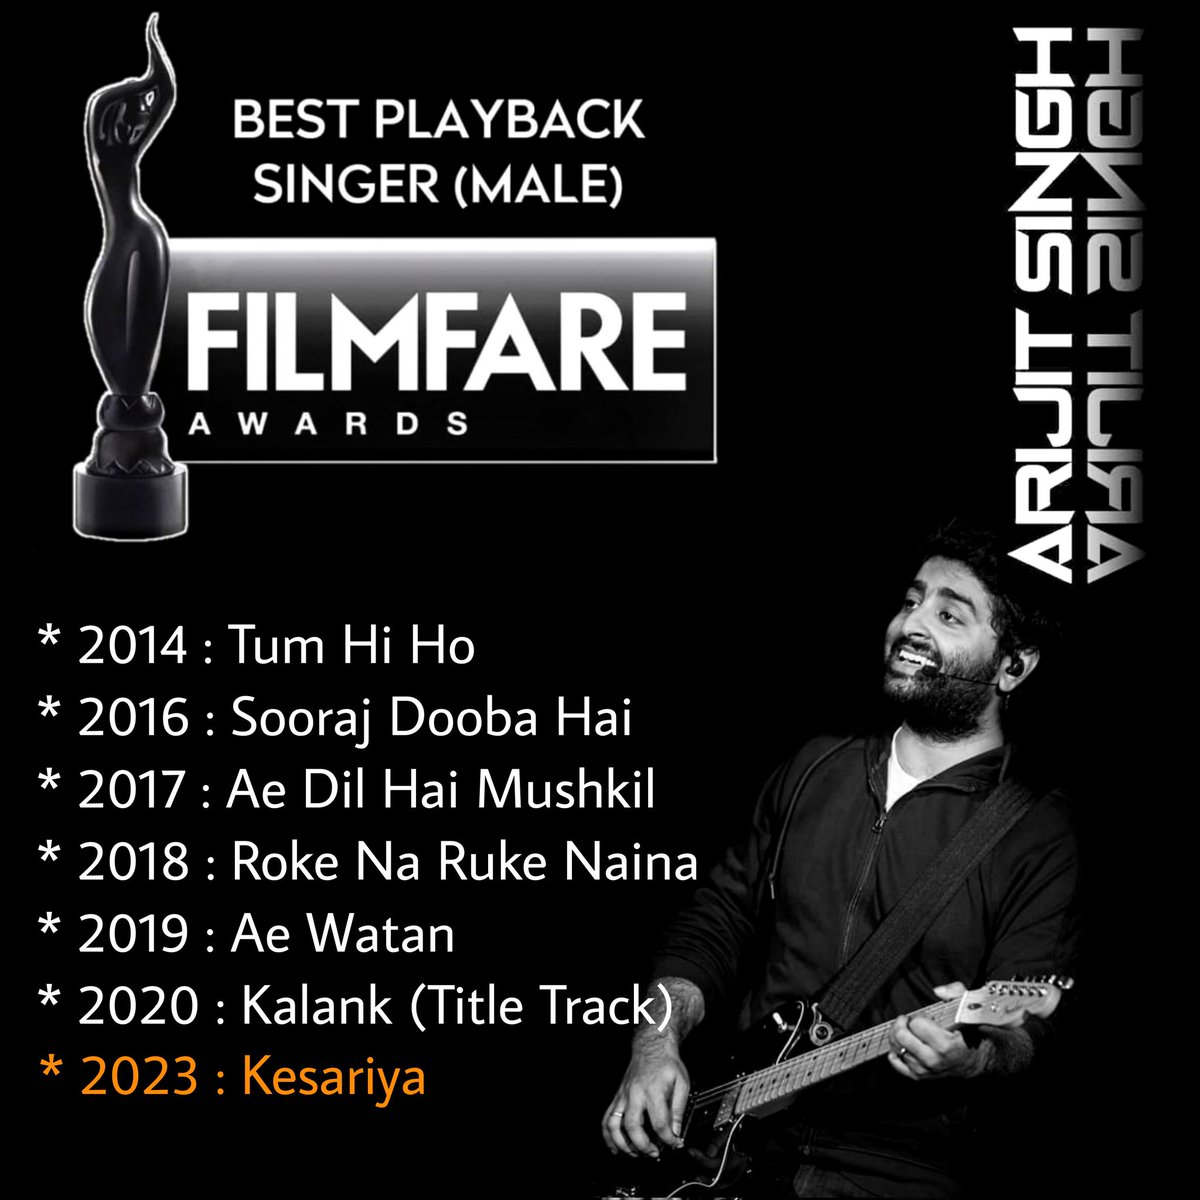 The Filmfare Award for Best Playback Singer (Male) goes to #ArijitSingh for #Kesariya 🧡
#FilmfareAwards2023 #HyundaiFilmfareAwards